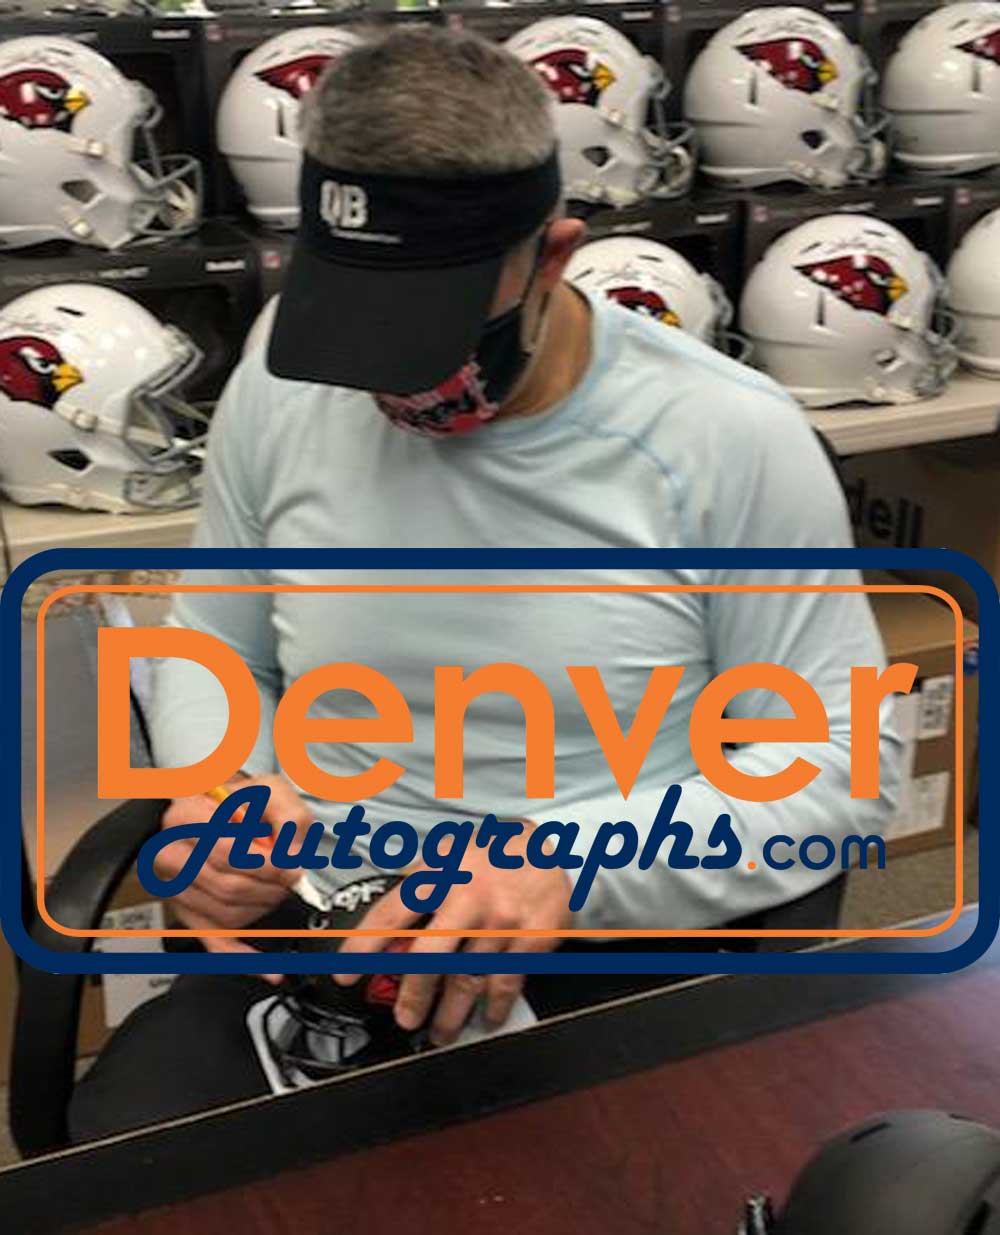 Kurt Warner Autograped/Signed Arizona Cardinals Eclipse Mini Helmet BAS 31136